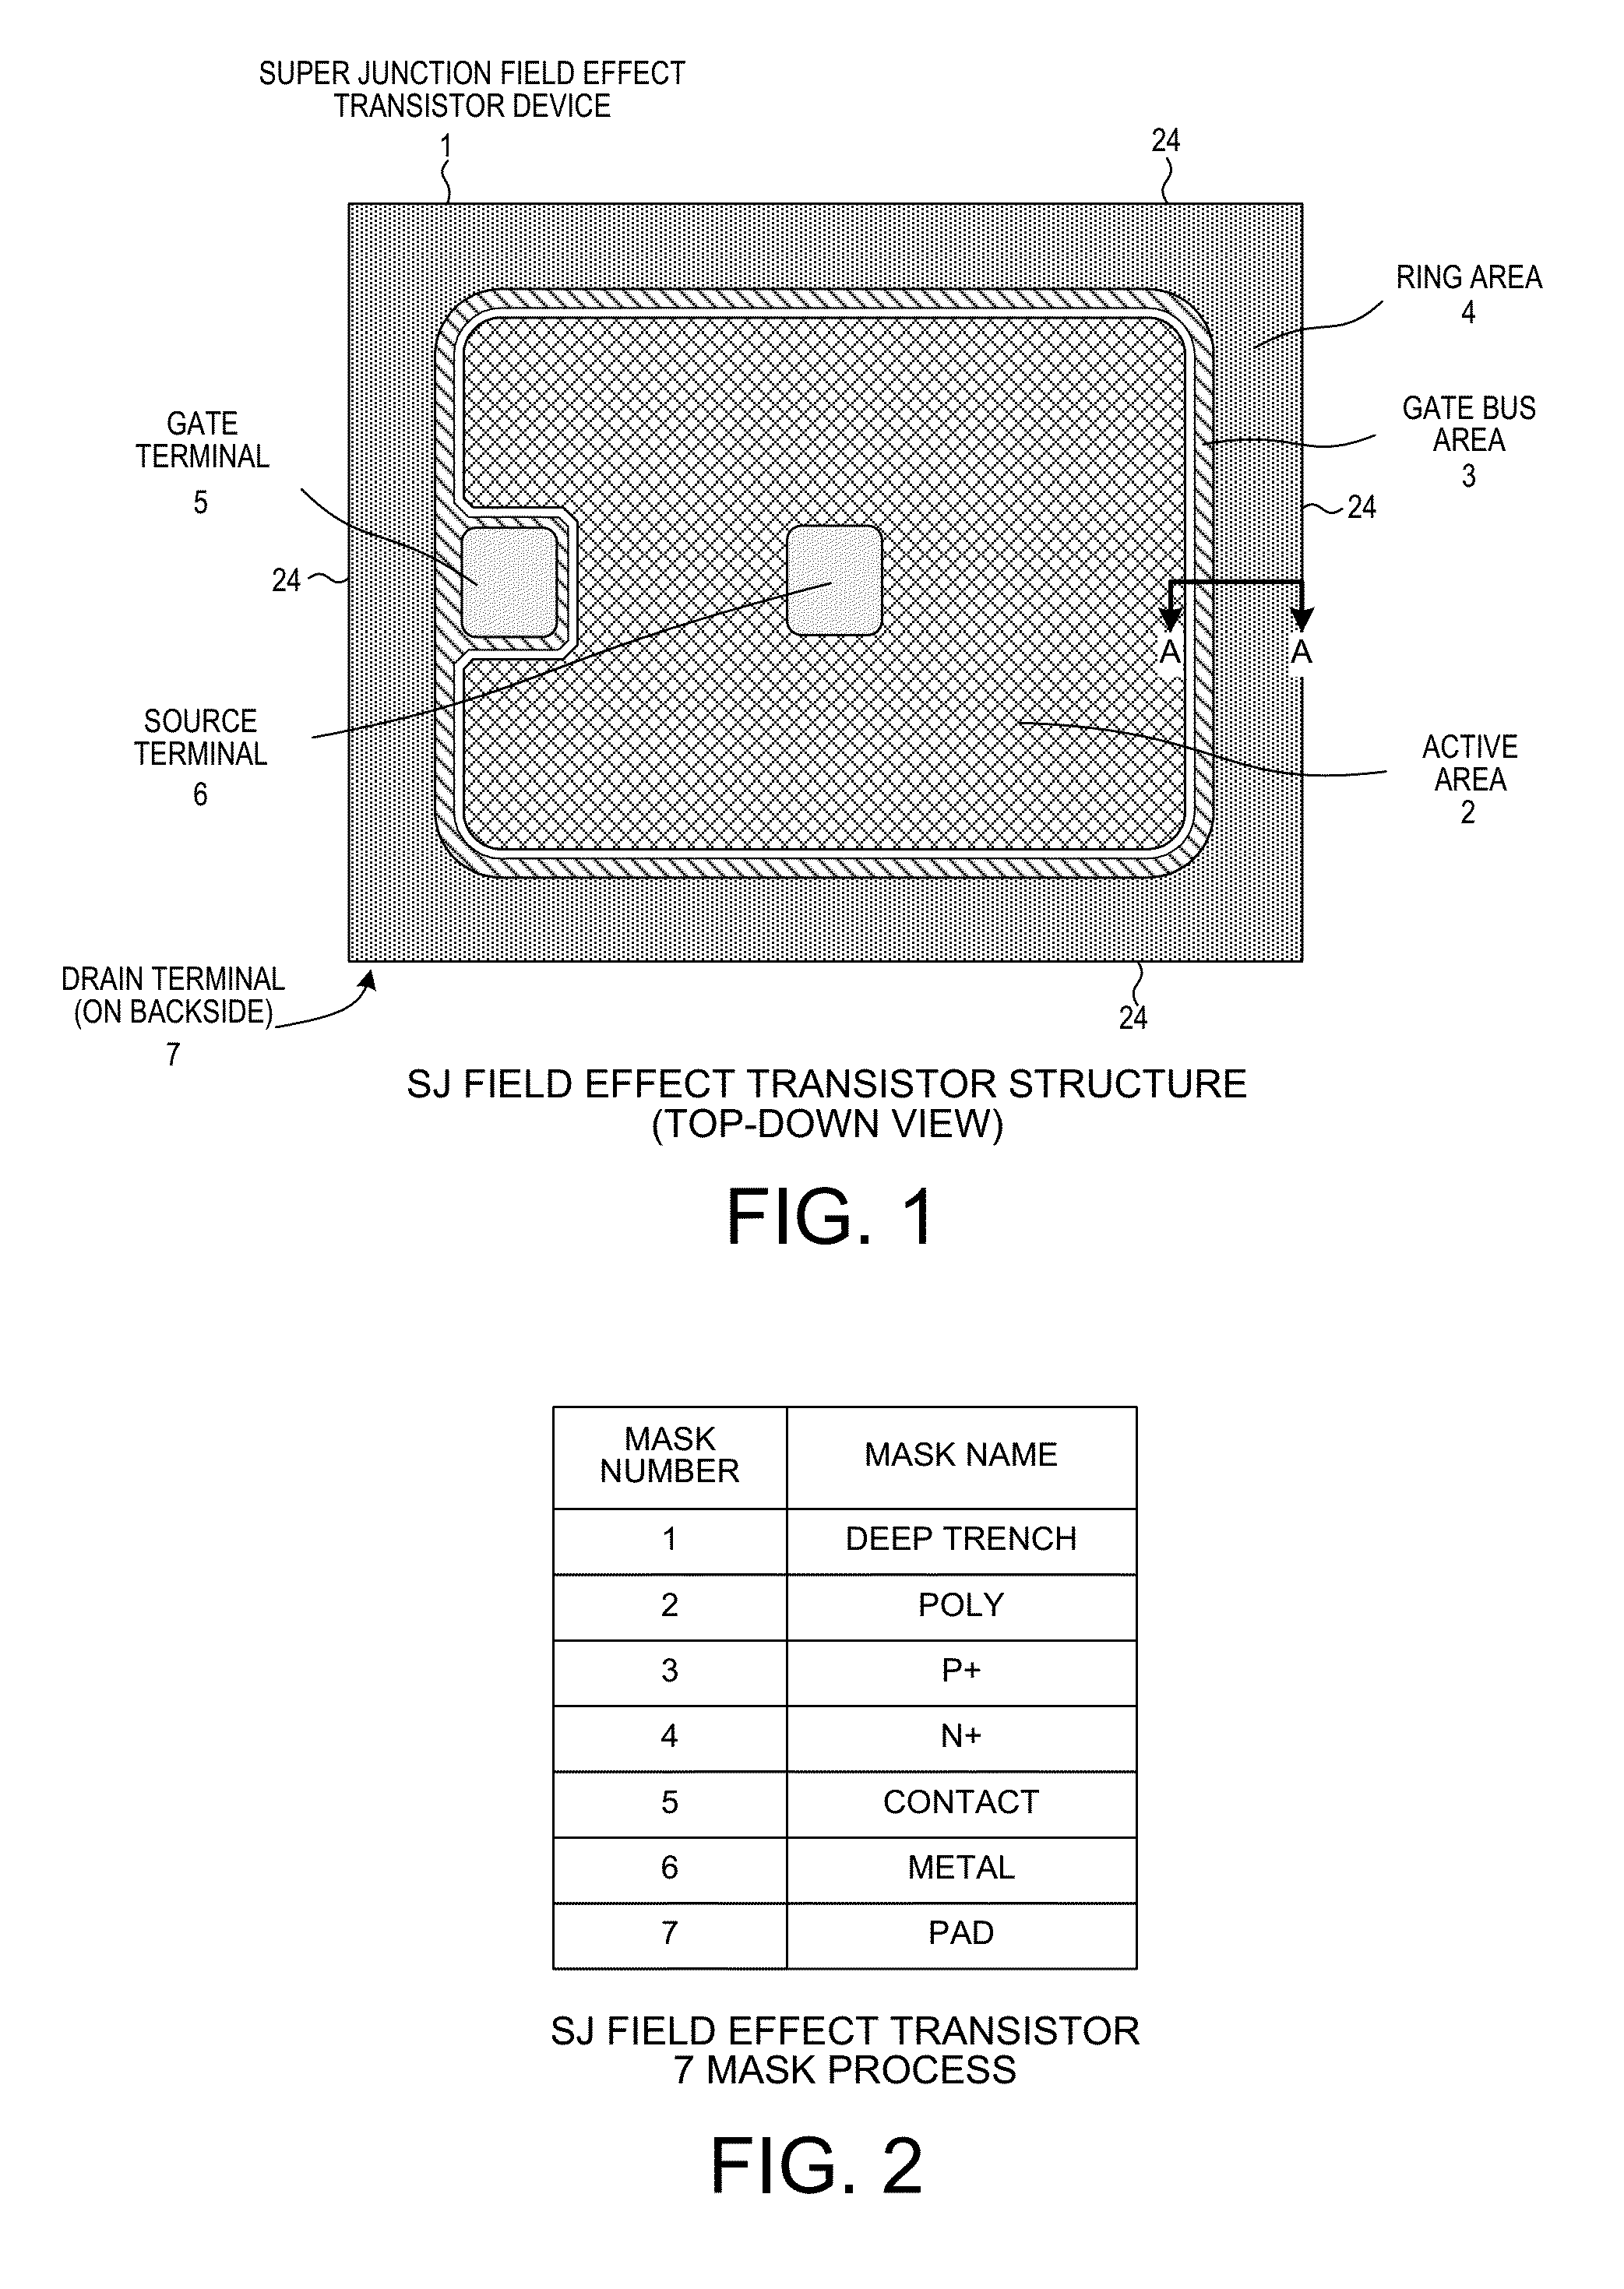 Super junction field effect transistor